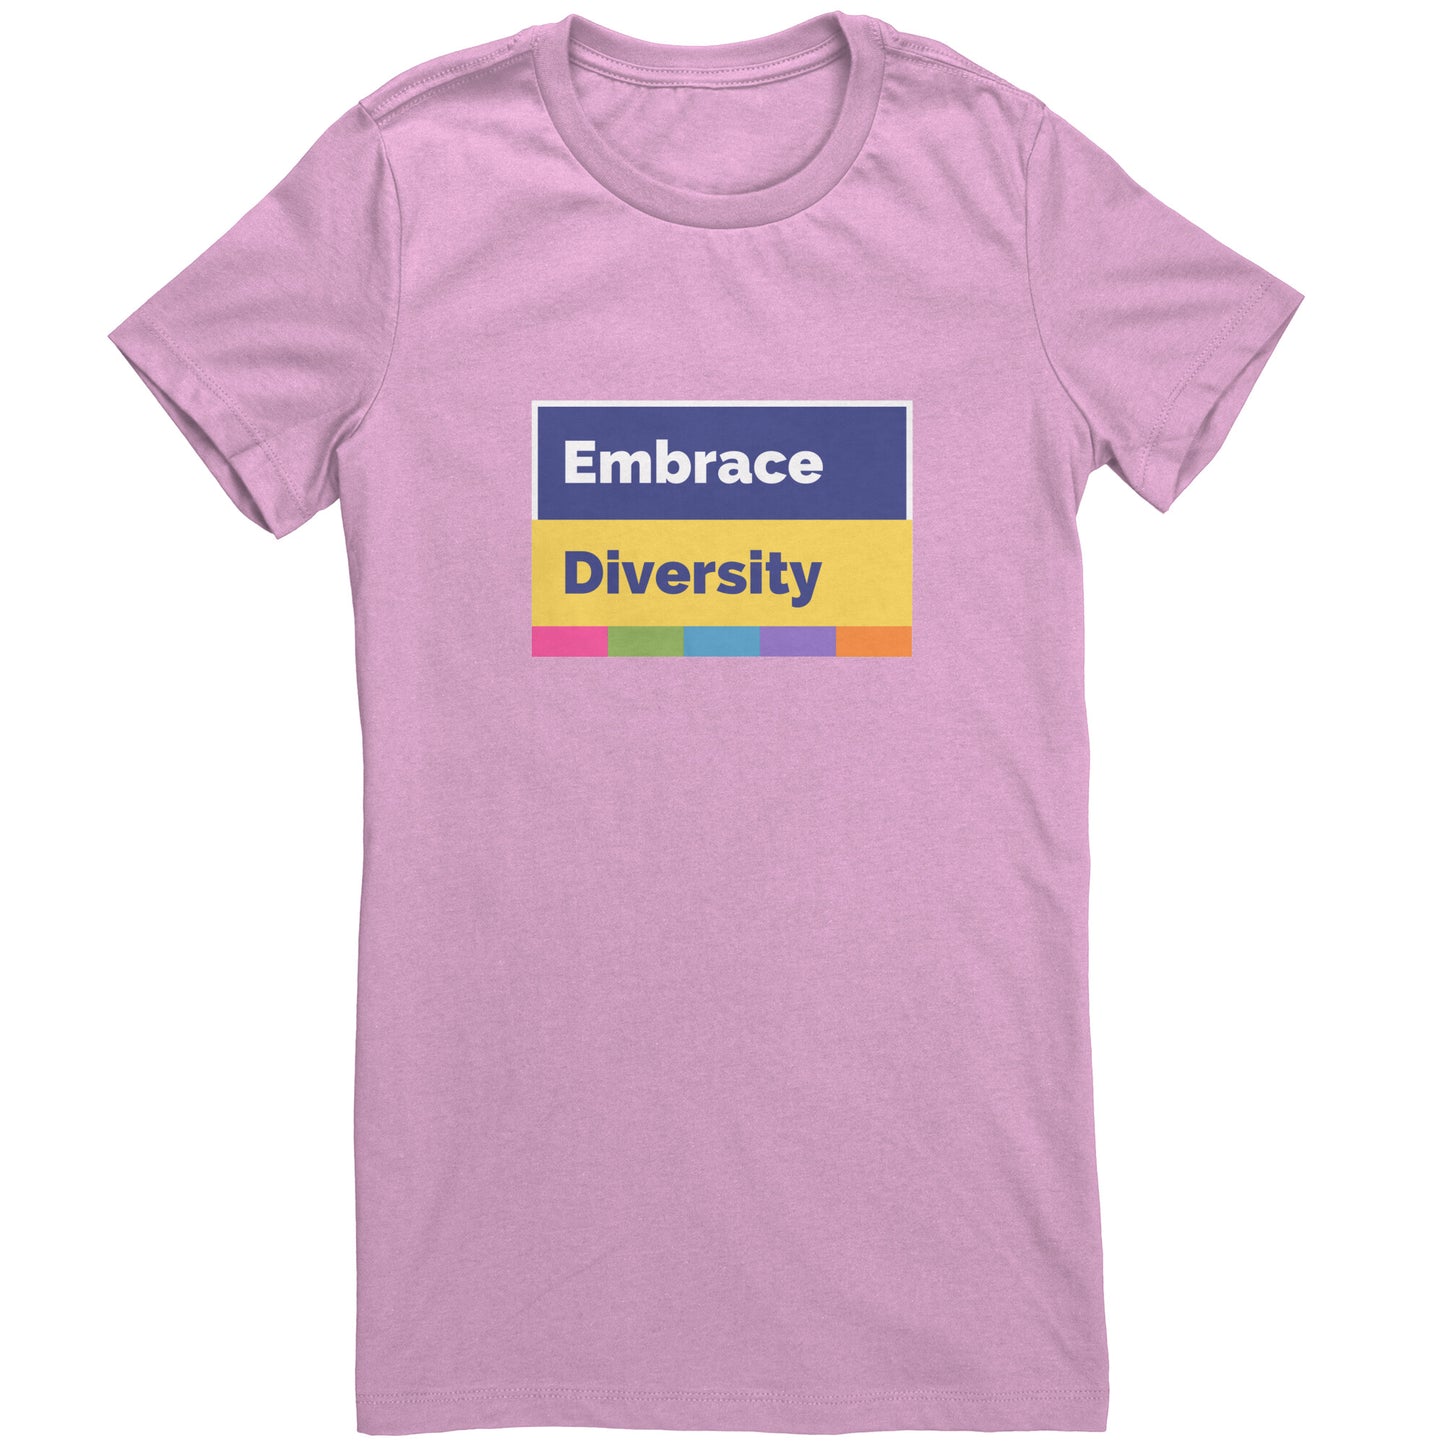 Embrace Diversity Women's T-Shirt